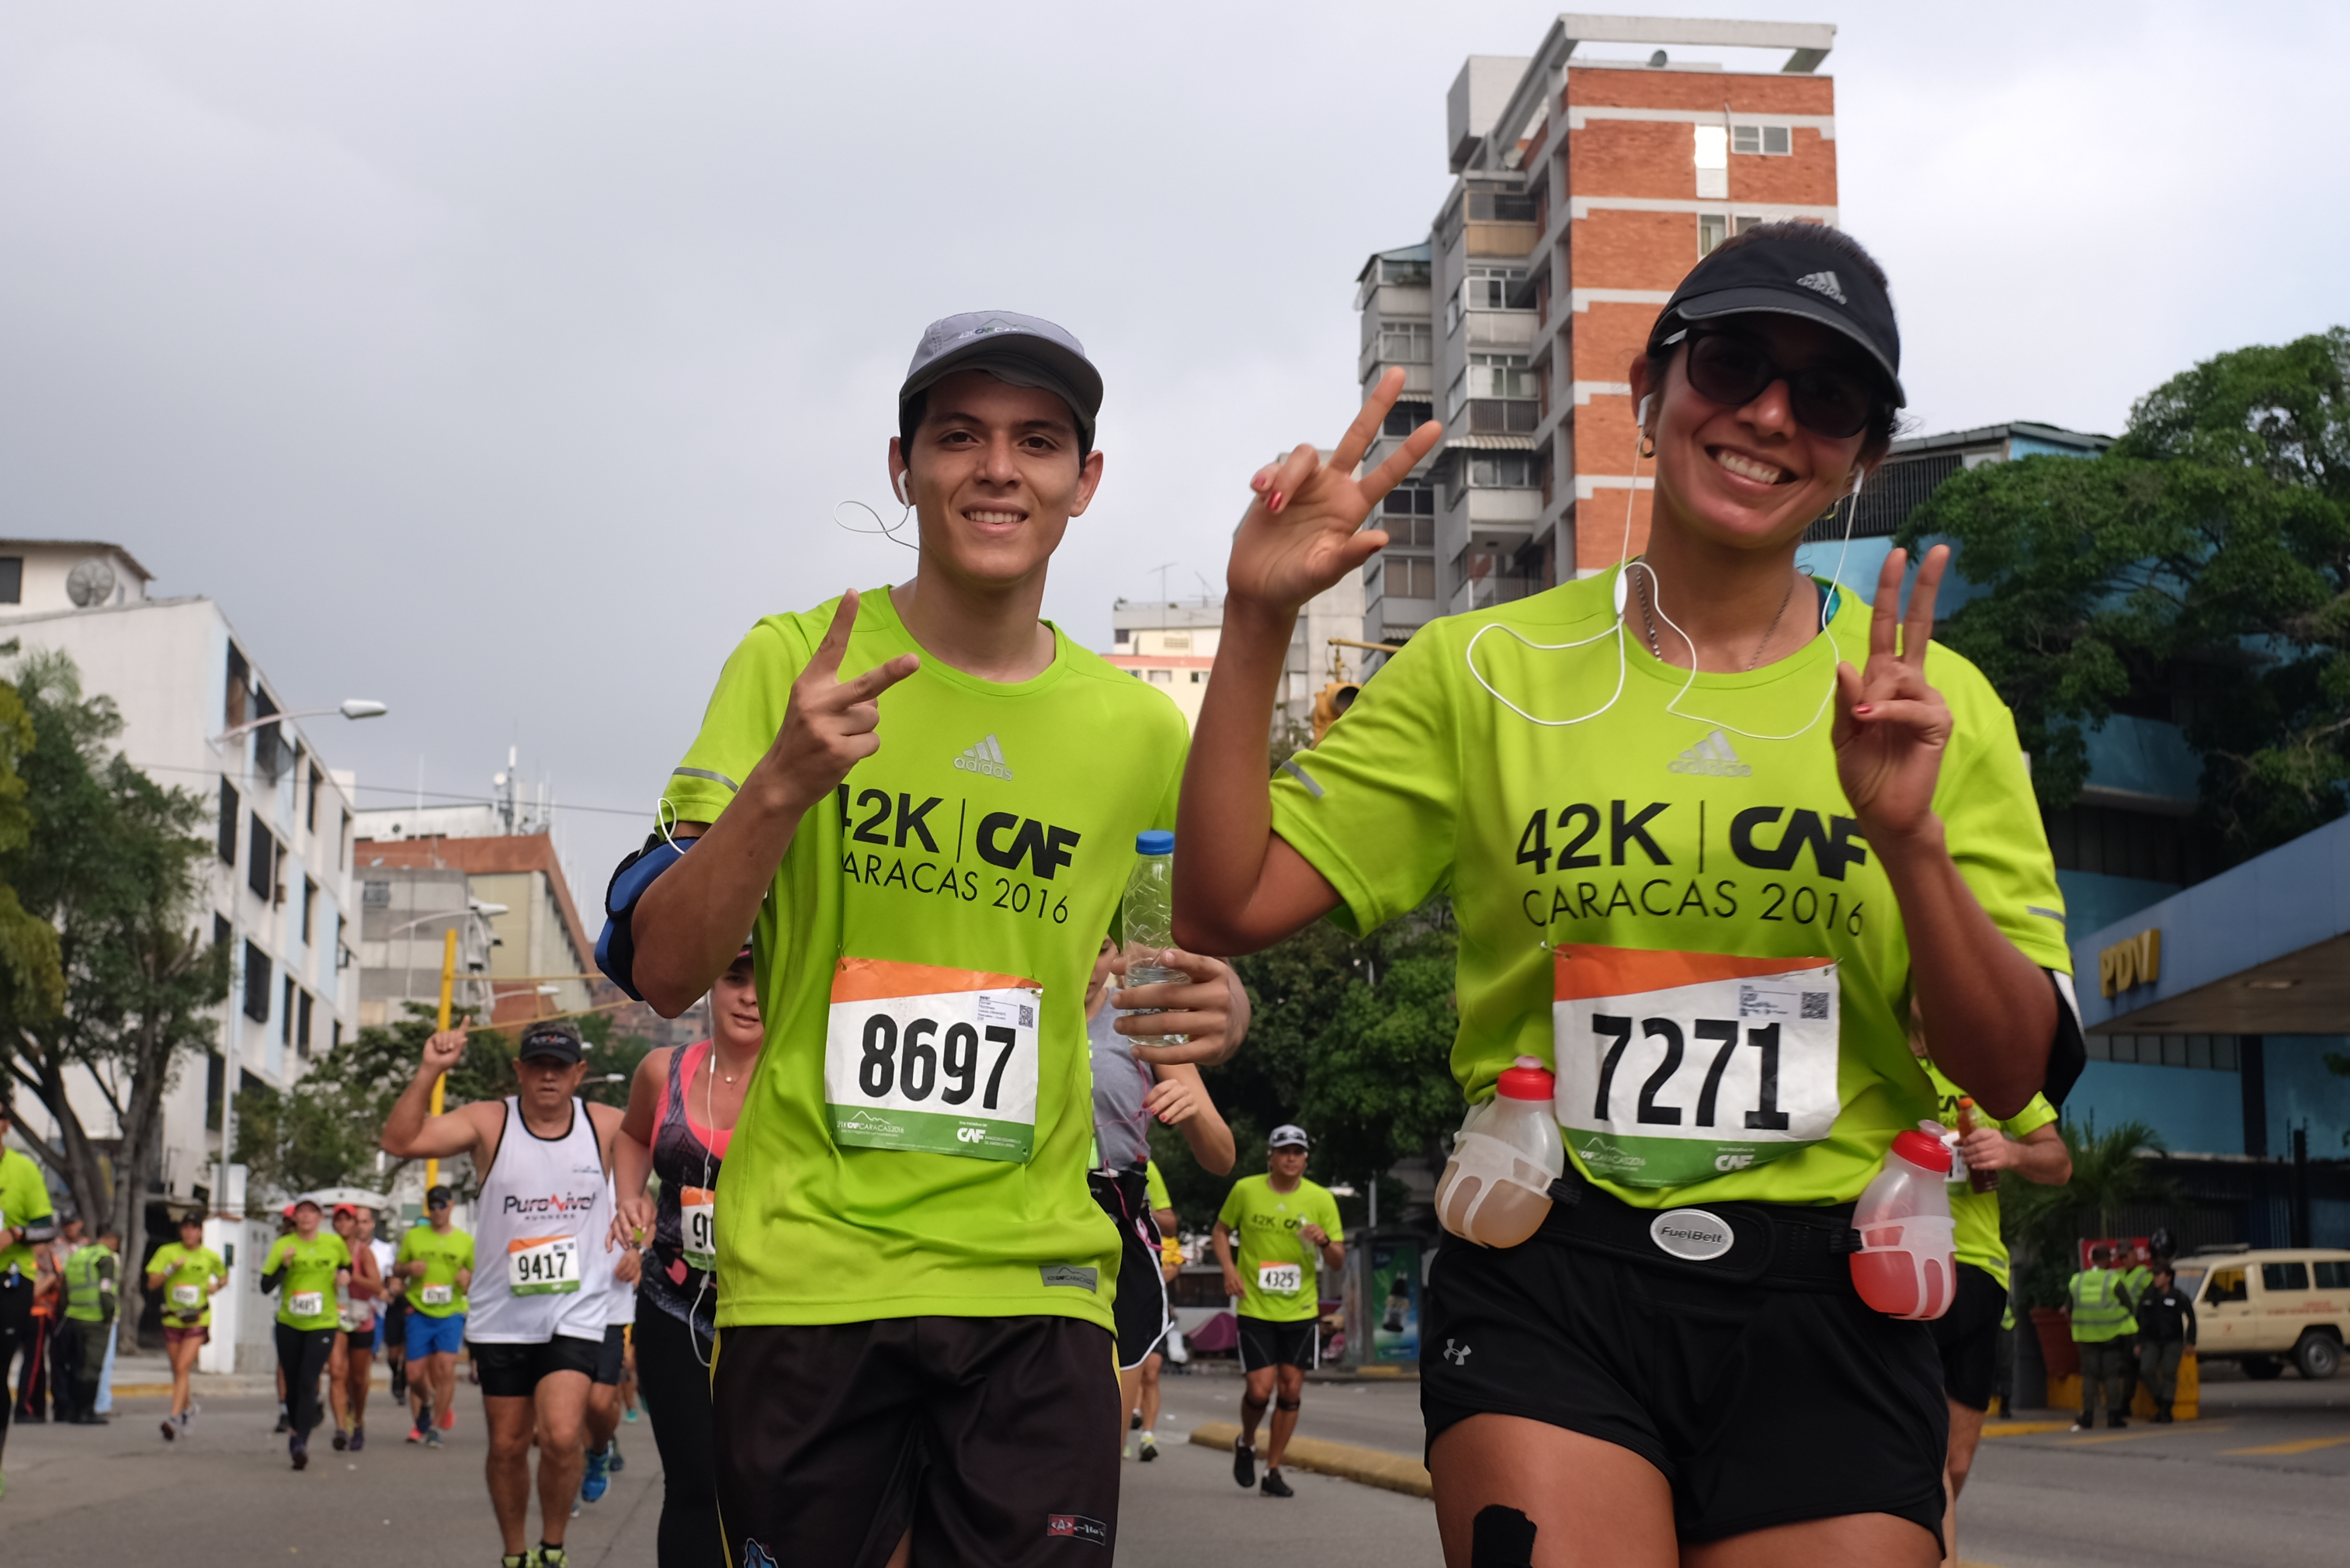 Carreras Perú - 5 CONSEJOS PARA ELEGIR TU GEL ENERGÉTICO #Running